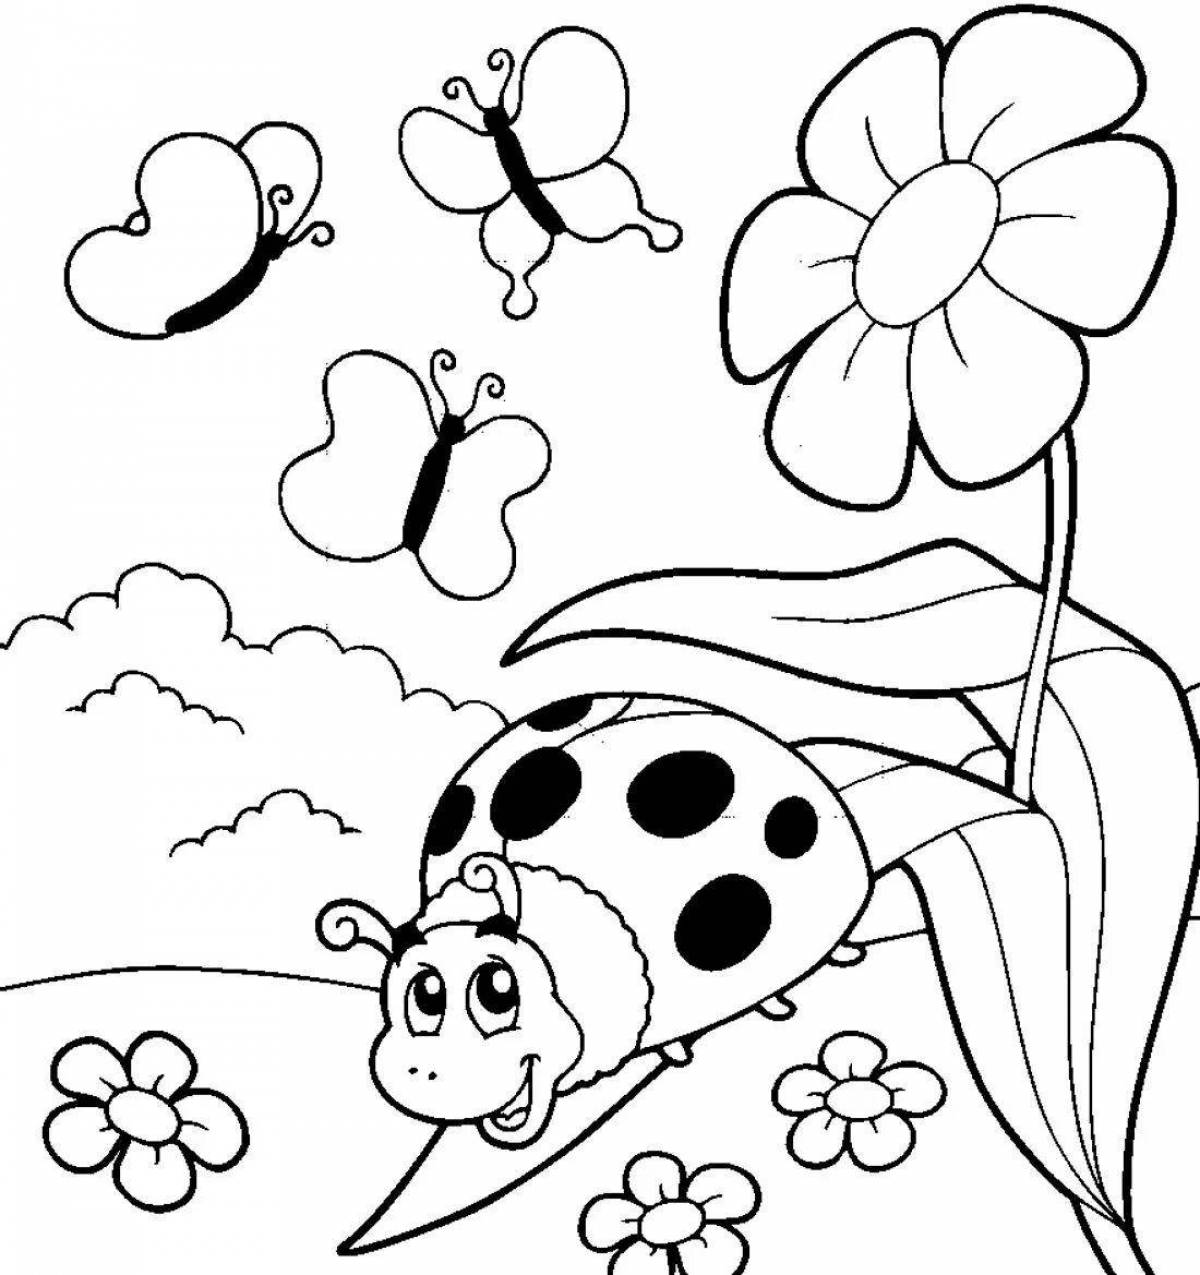 Colorful drawing of a ladybug